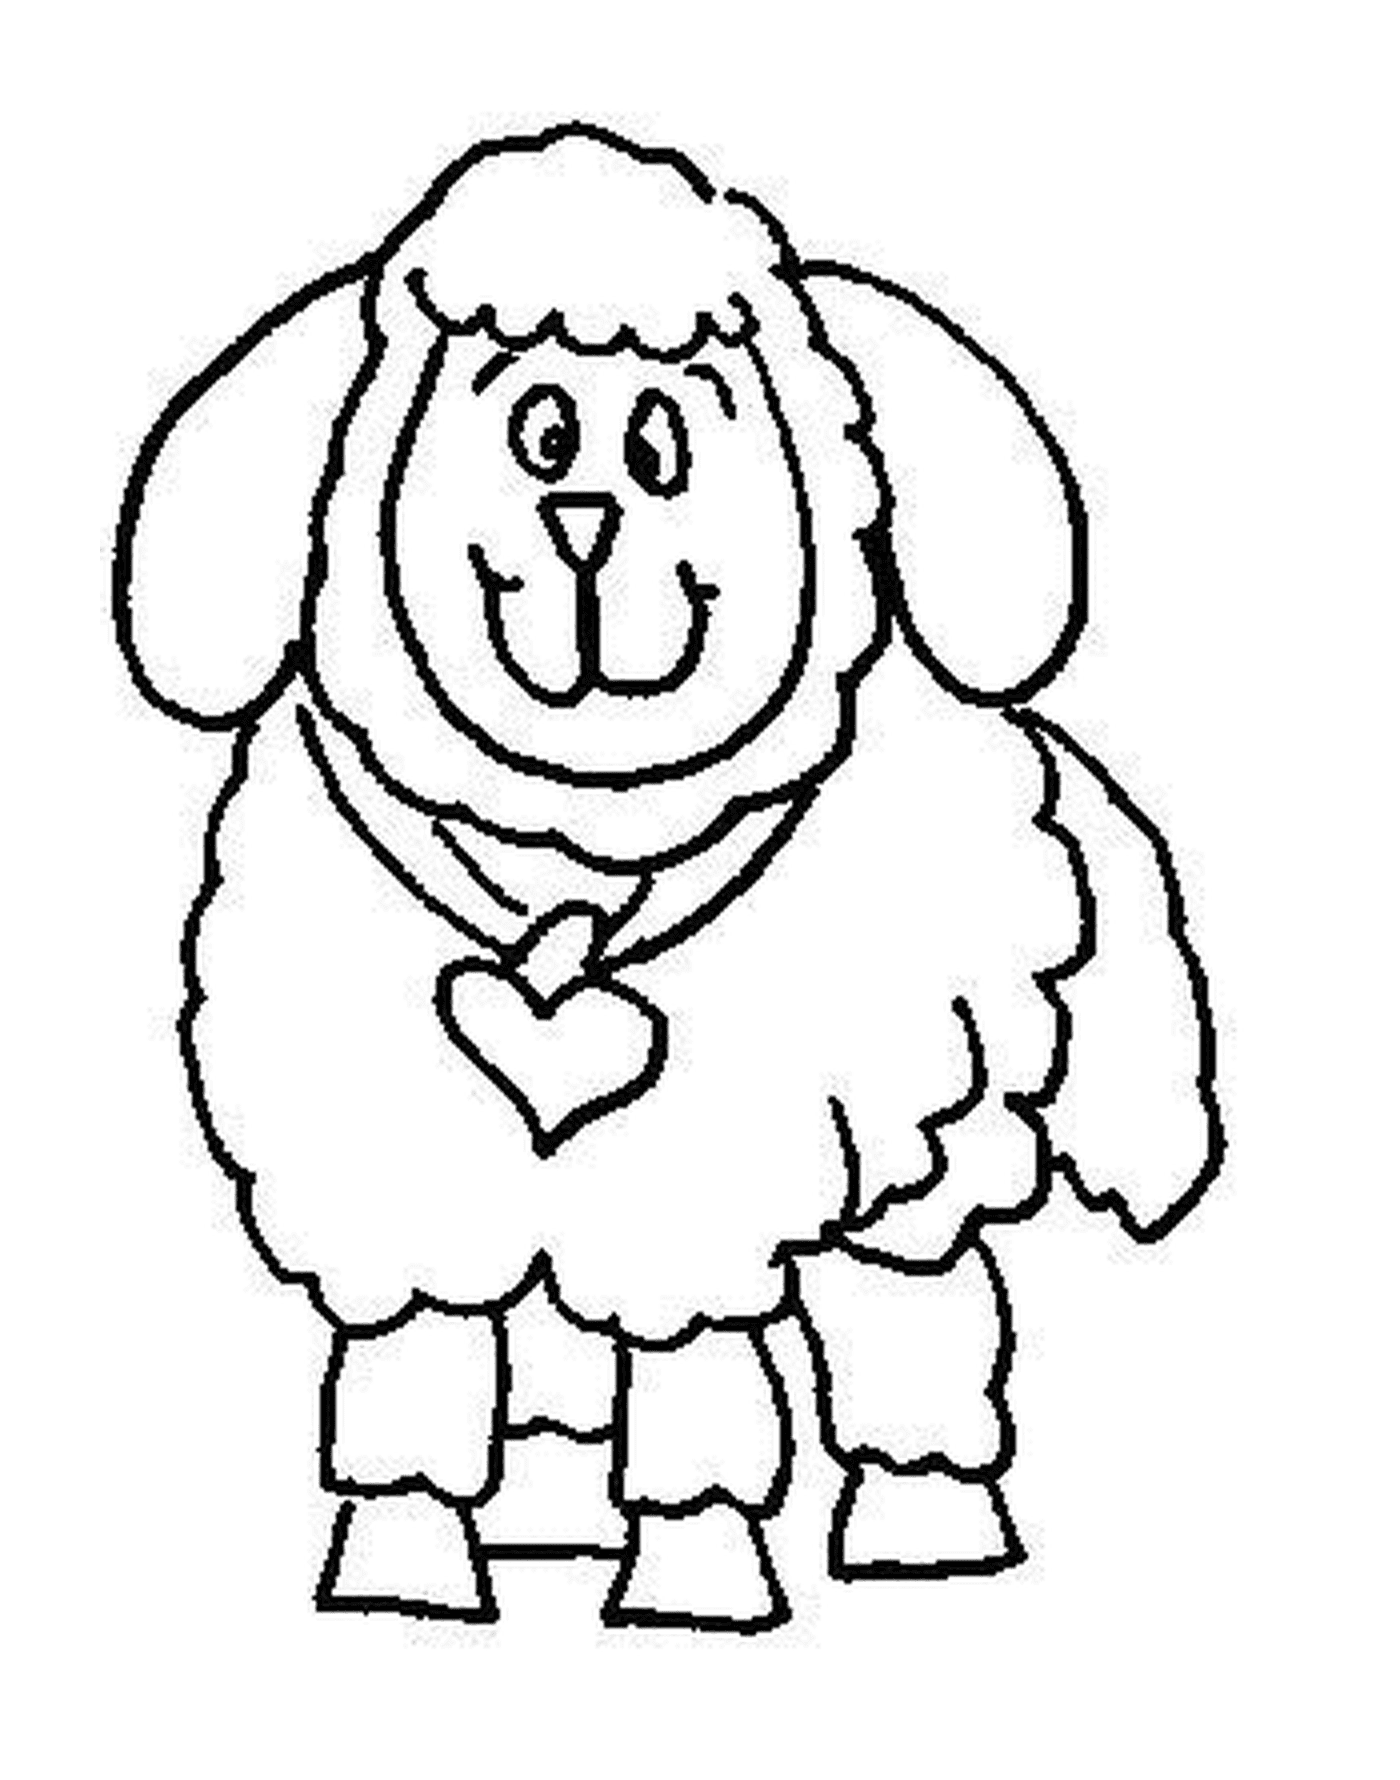  Sheep with heart around 